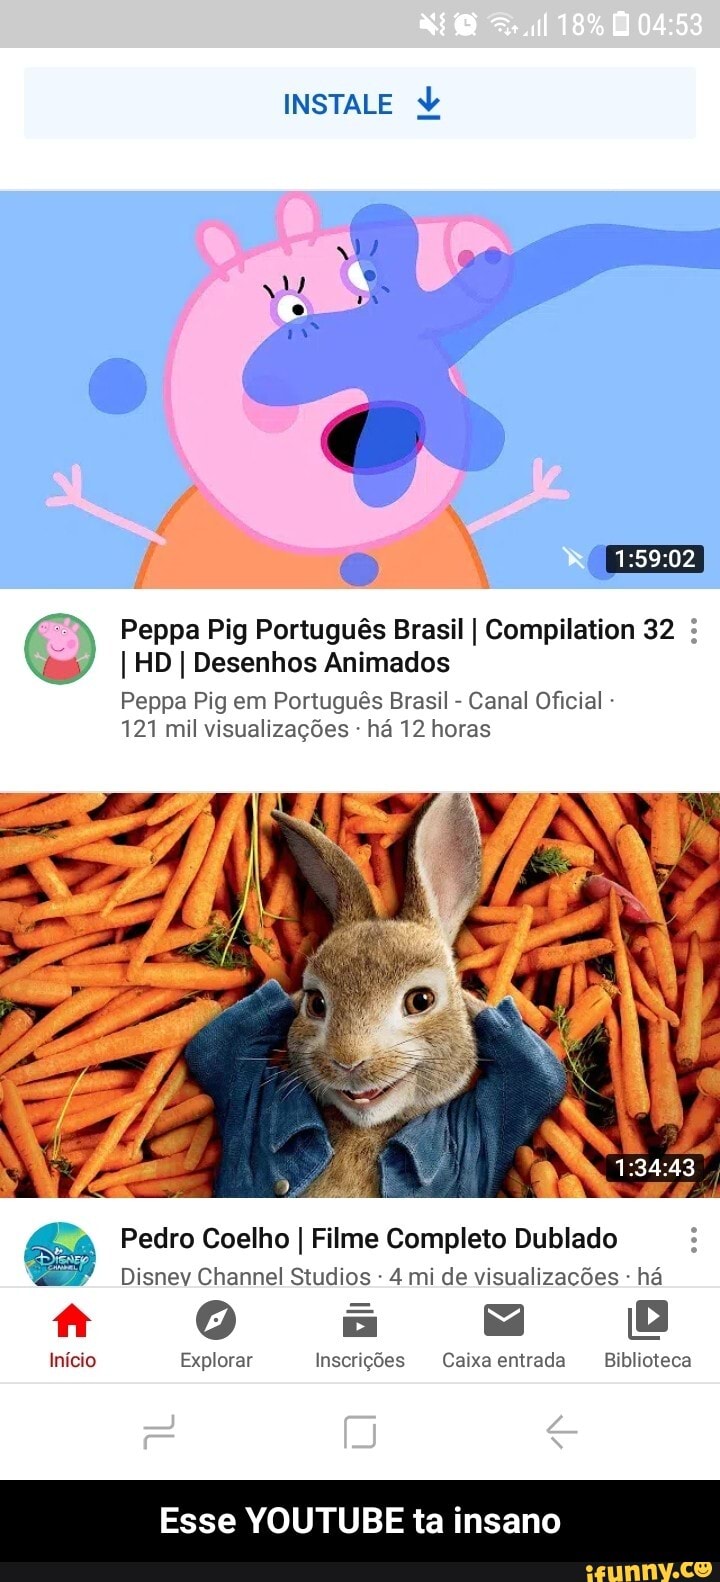 Peppa Pig Português Brasil, Compilation 2, HD